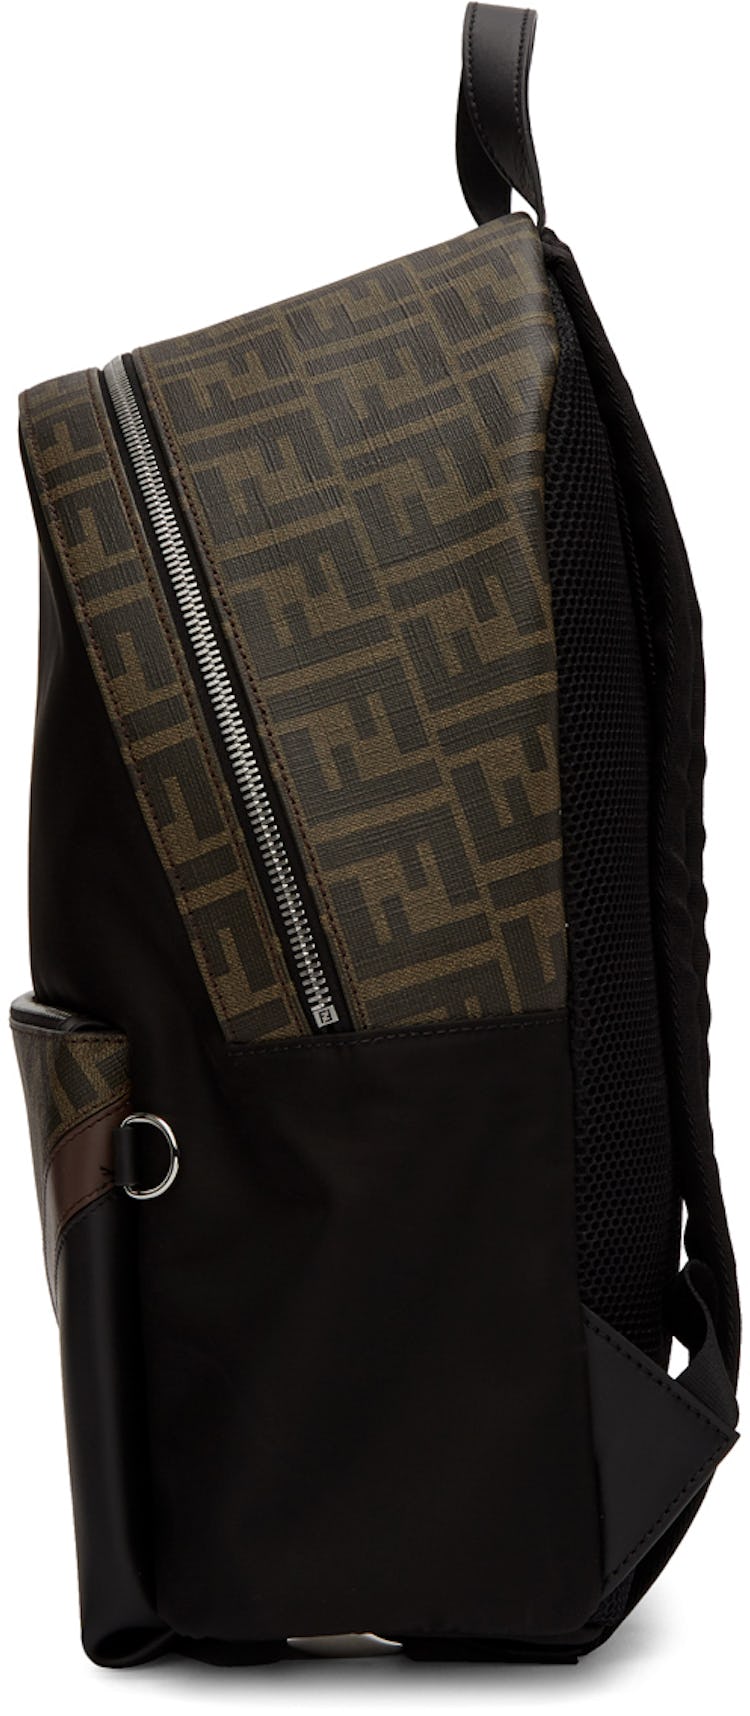 Black 'Forever Fendi' Fabric Backpack: additional image